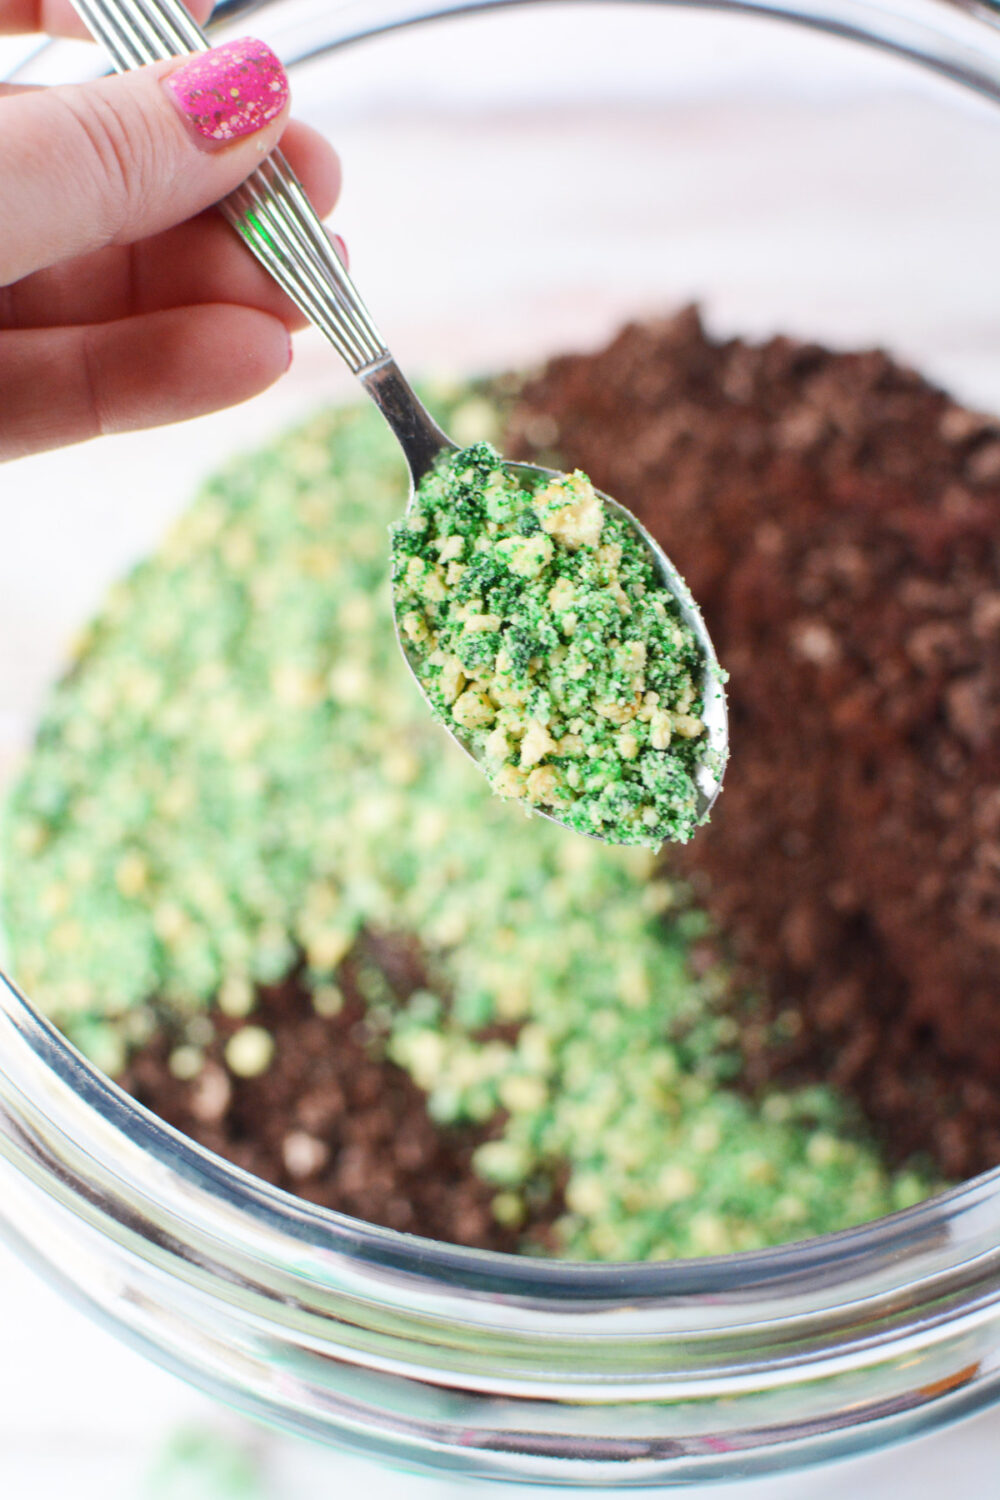 Spooning green crushed cookies into jar